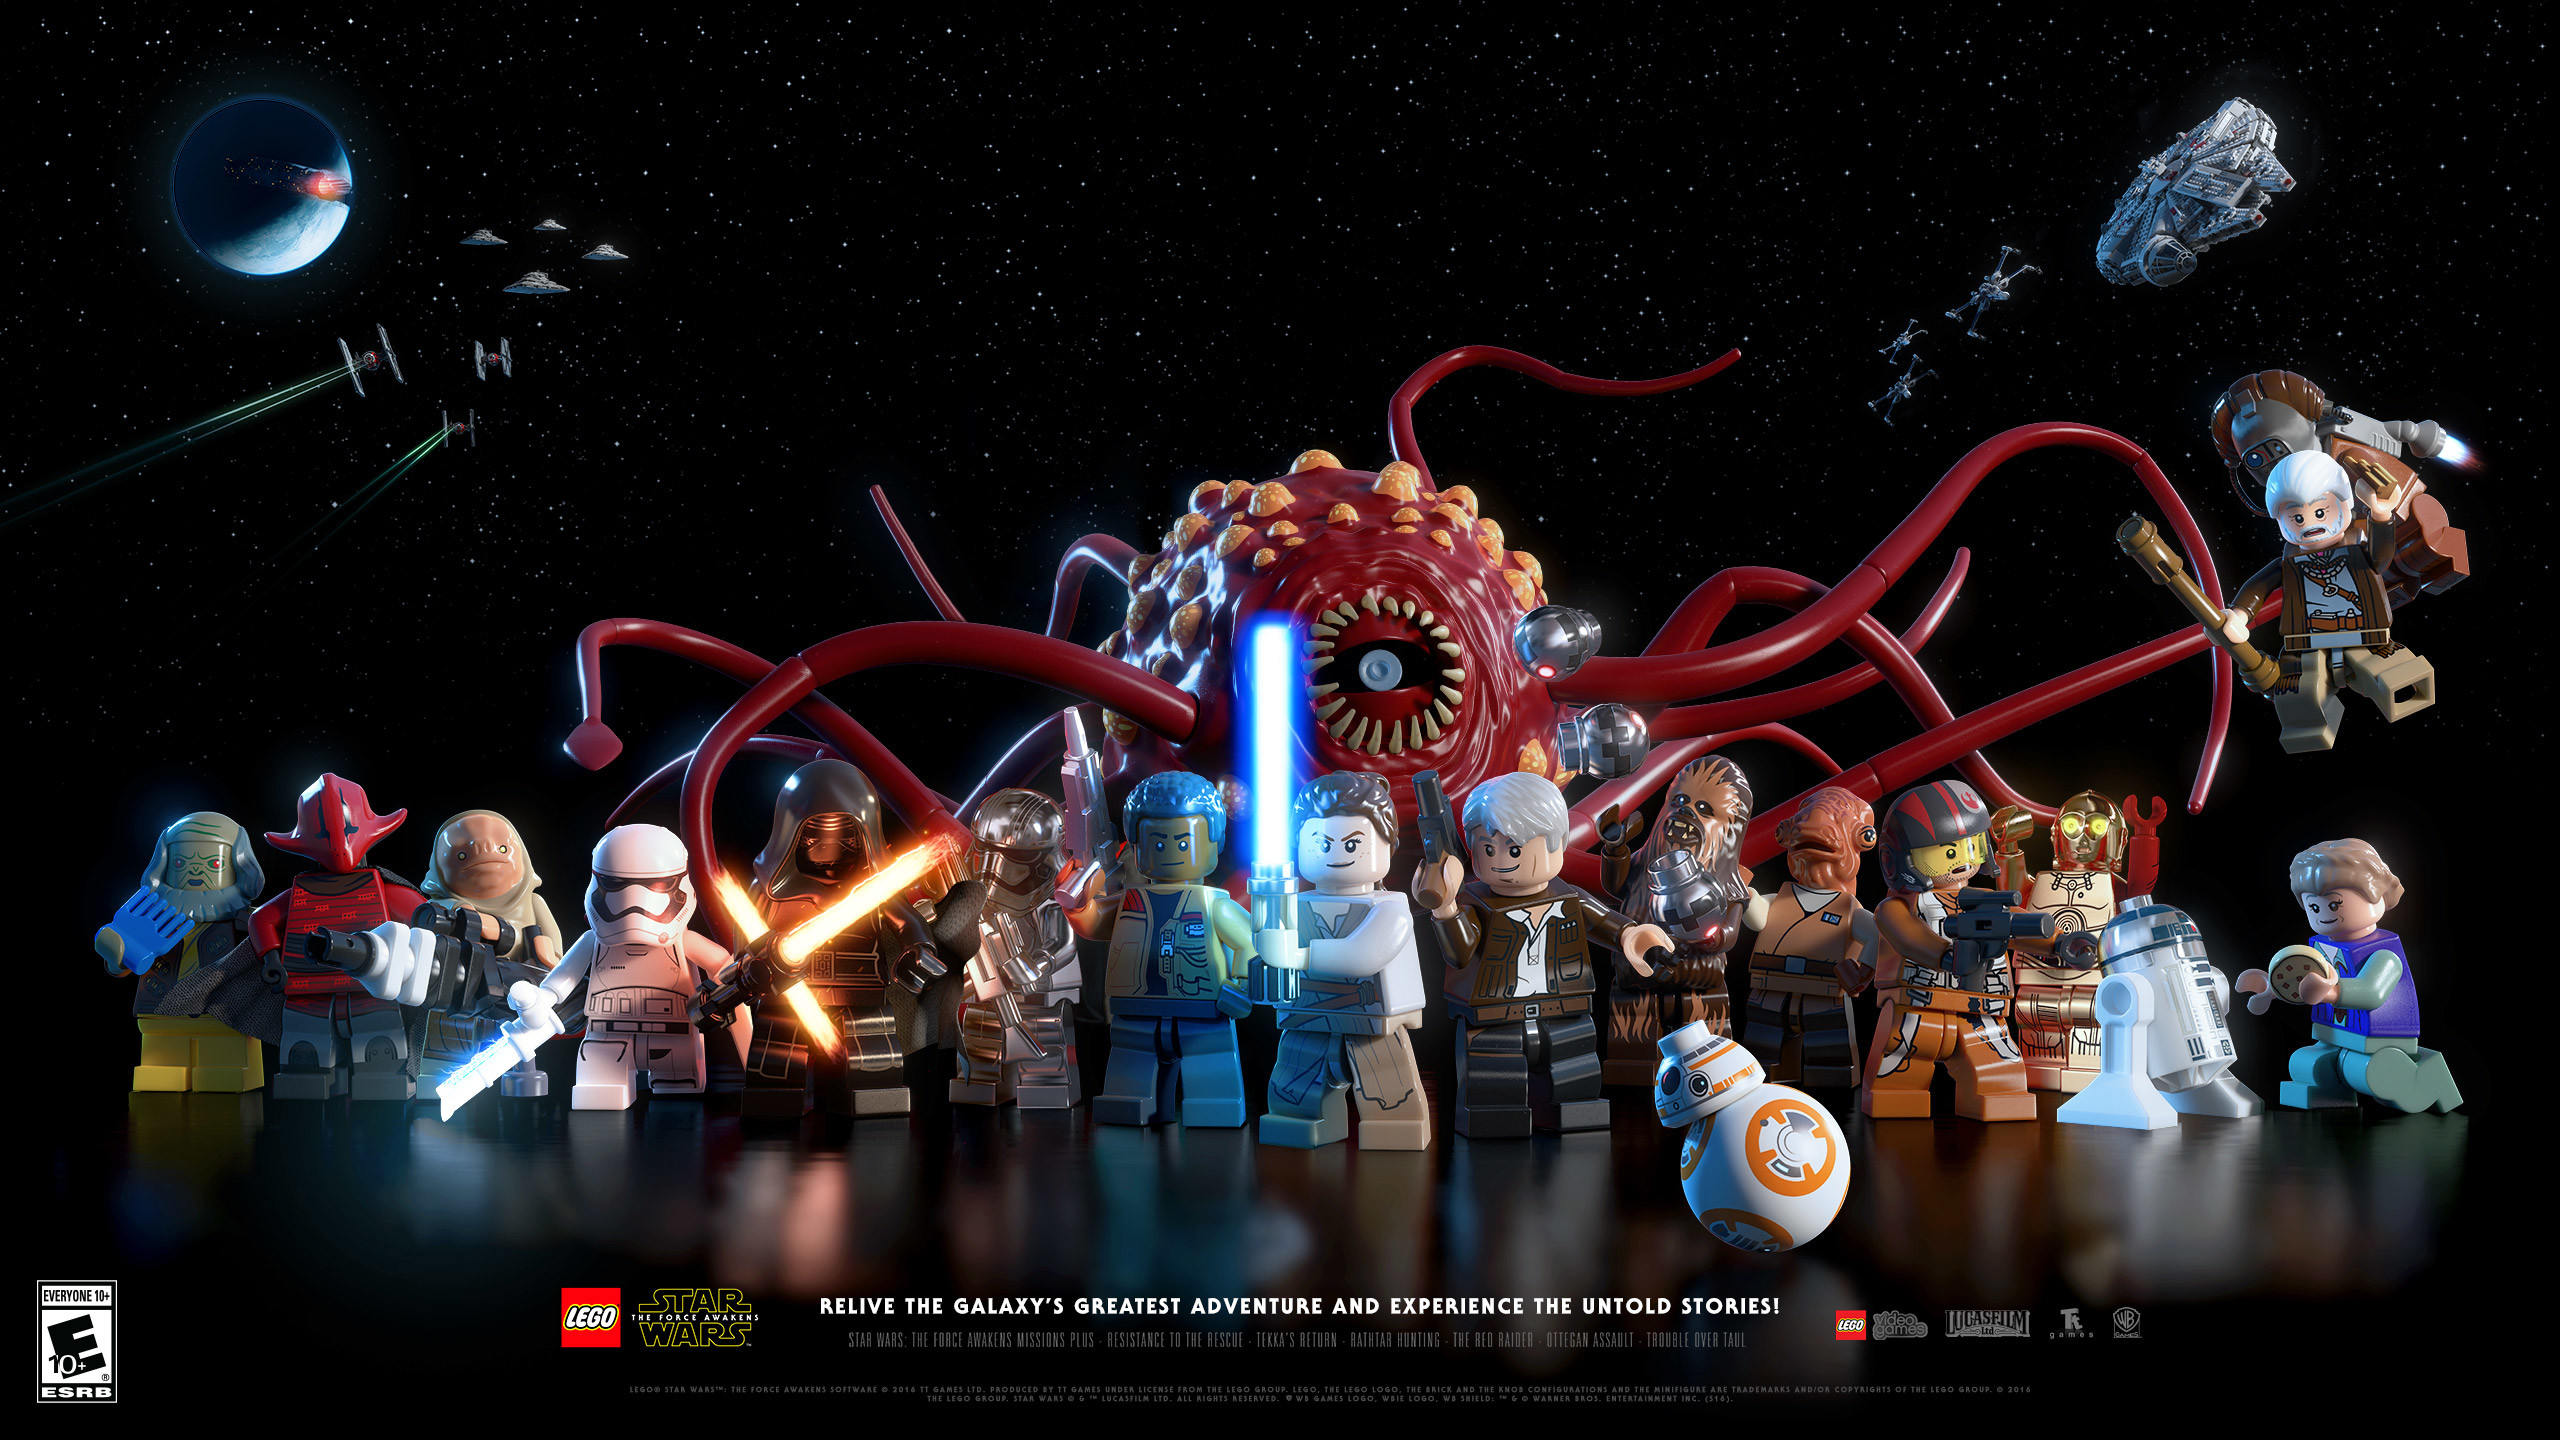 2560x1440 LEGO Star Wars: The Force Awakens Video Game. Landscape Â· Vertical